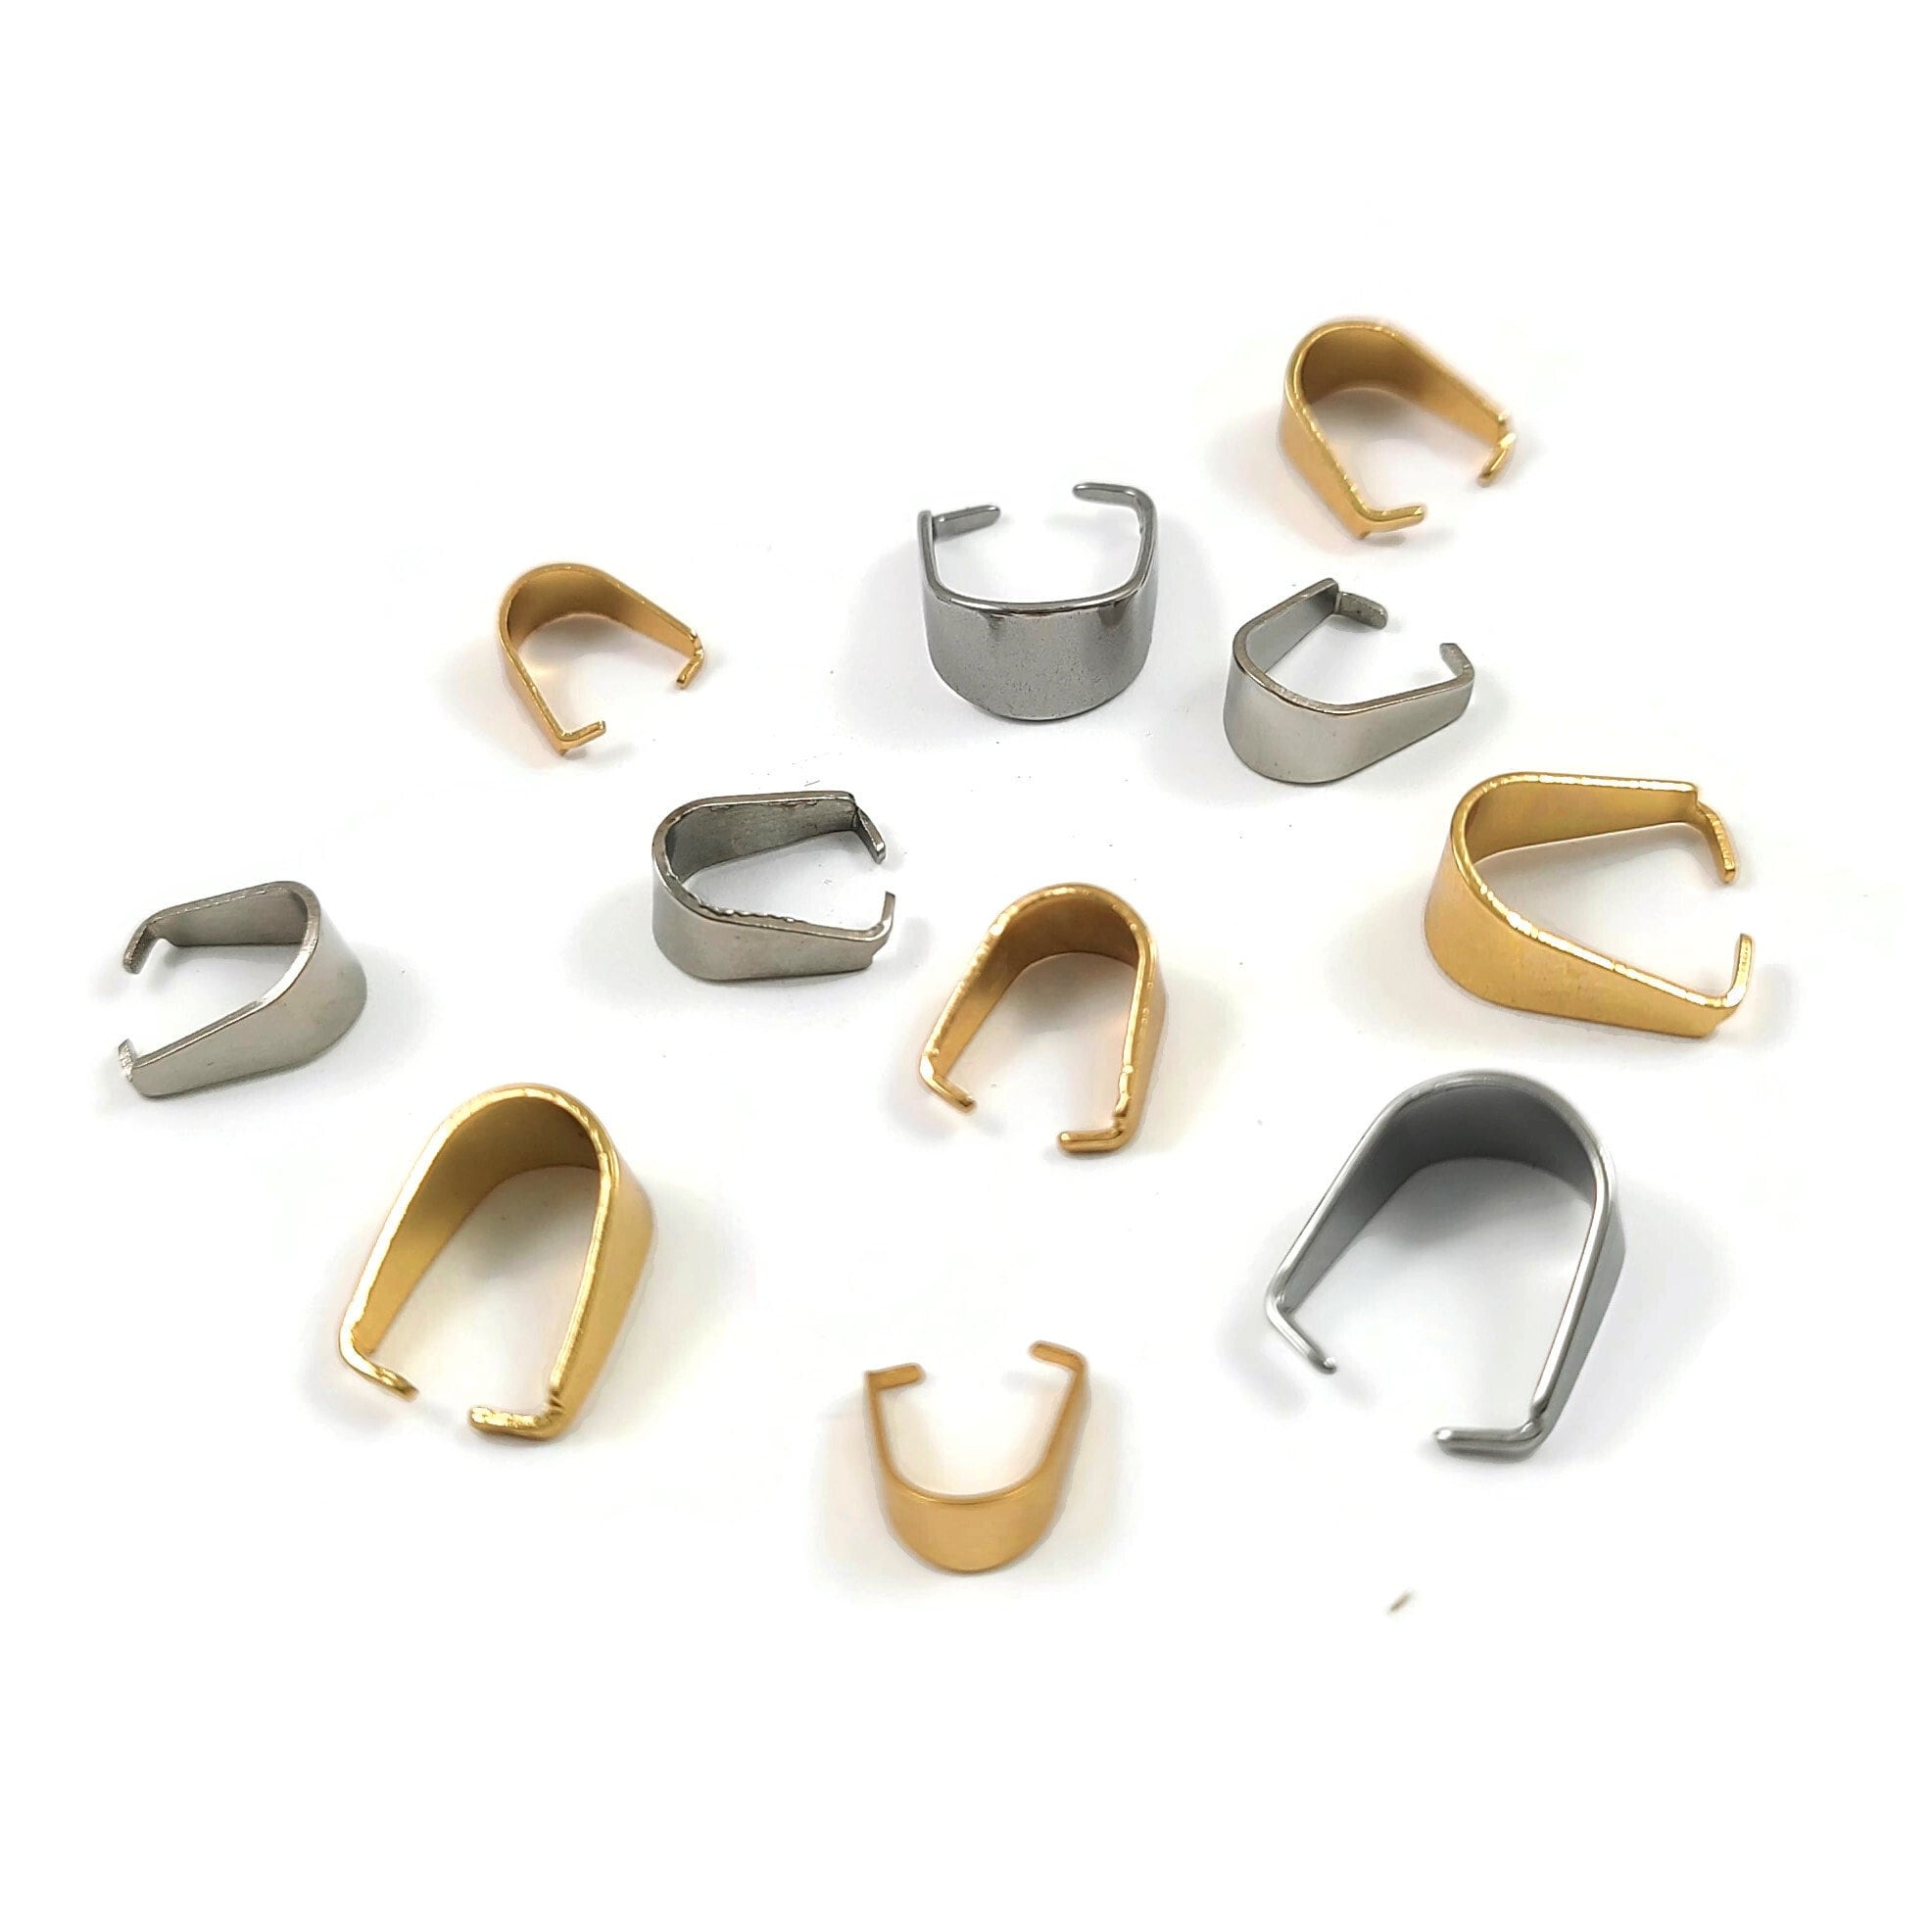 Wholesale DIY Pendant Bails Jewelry Making Finding Kit 